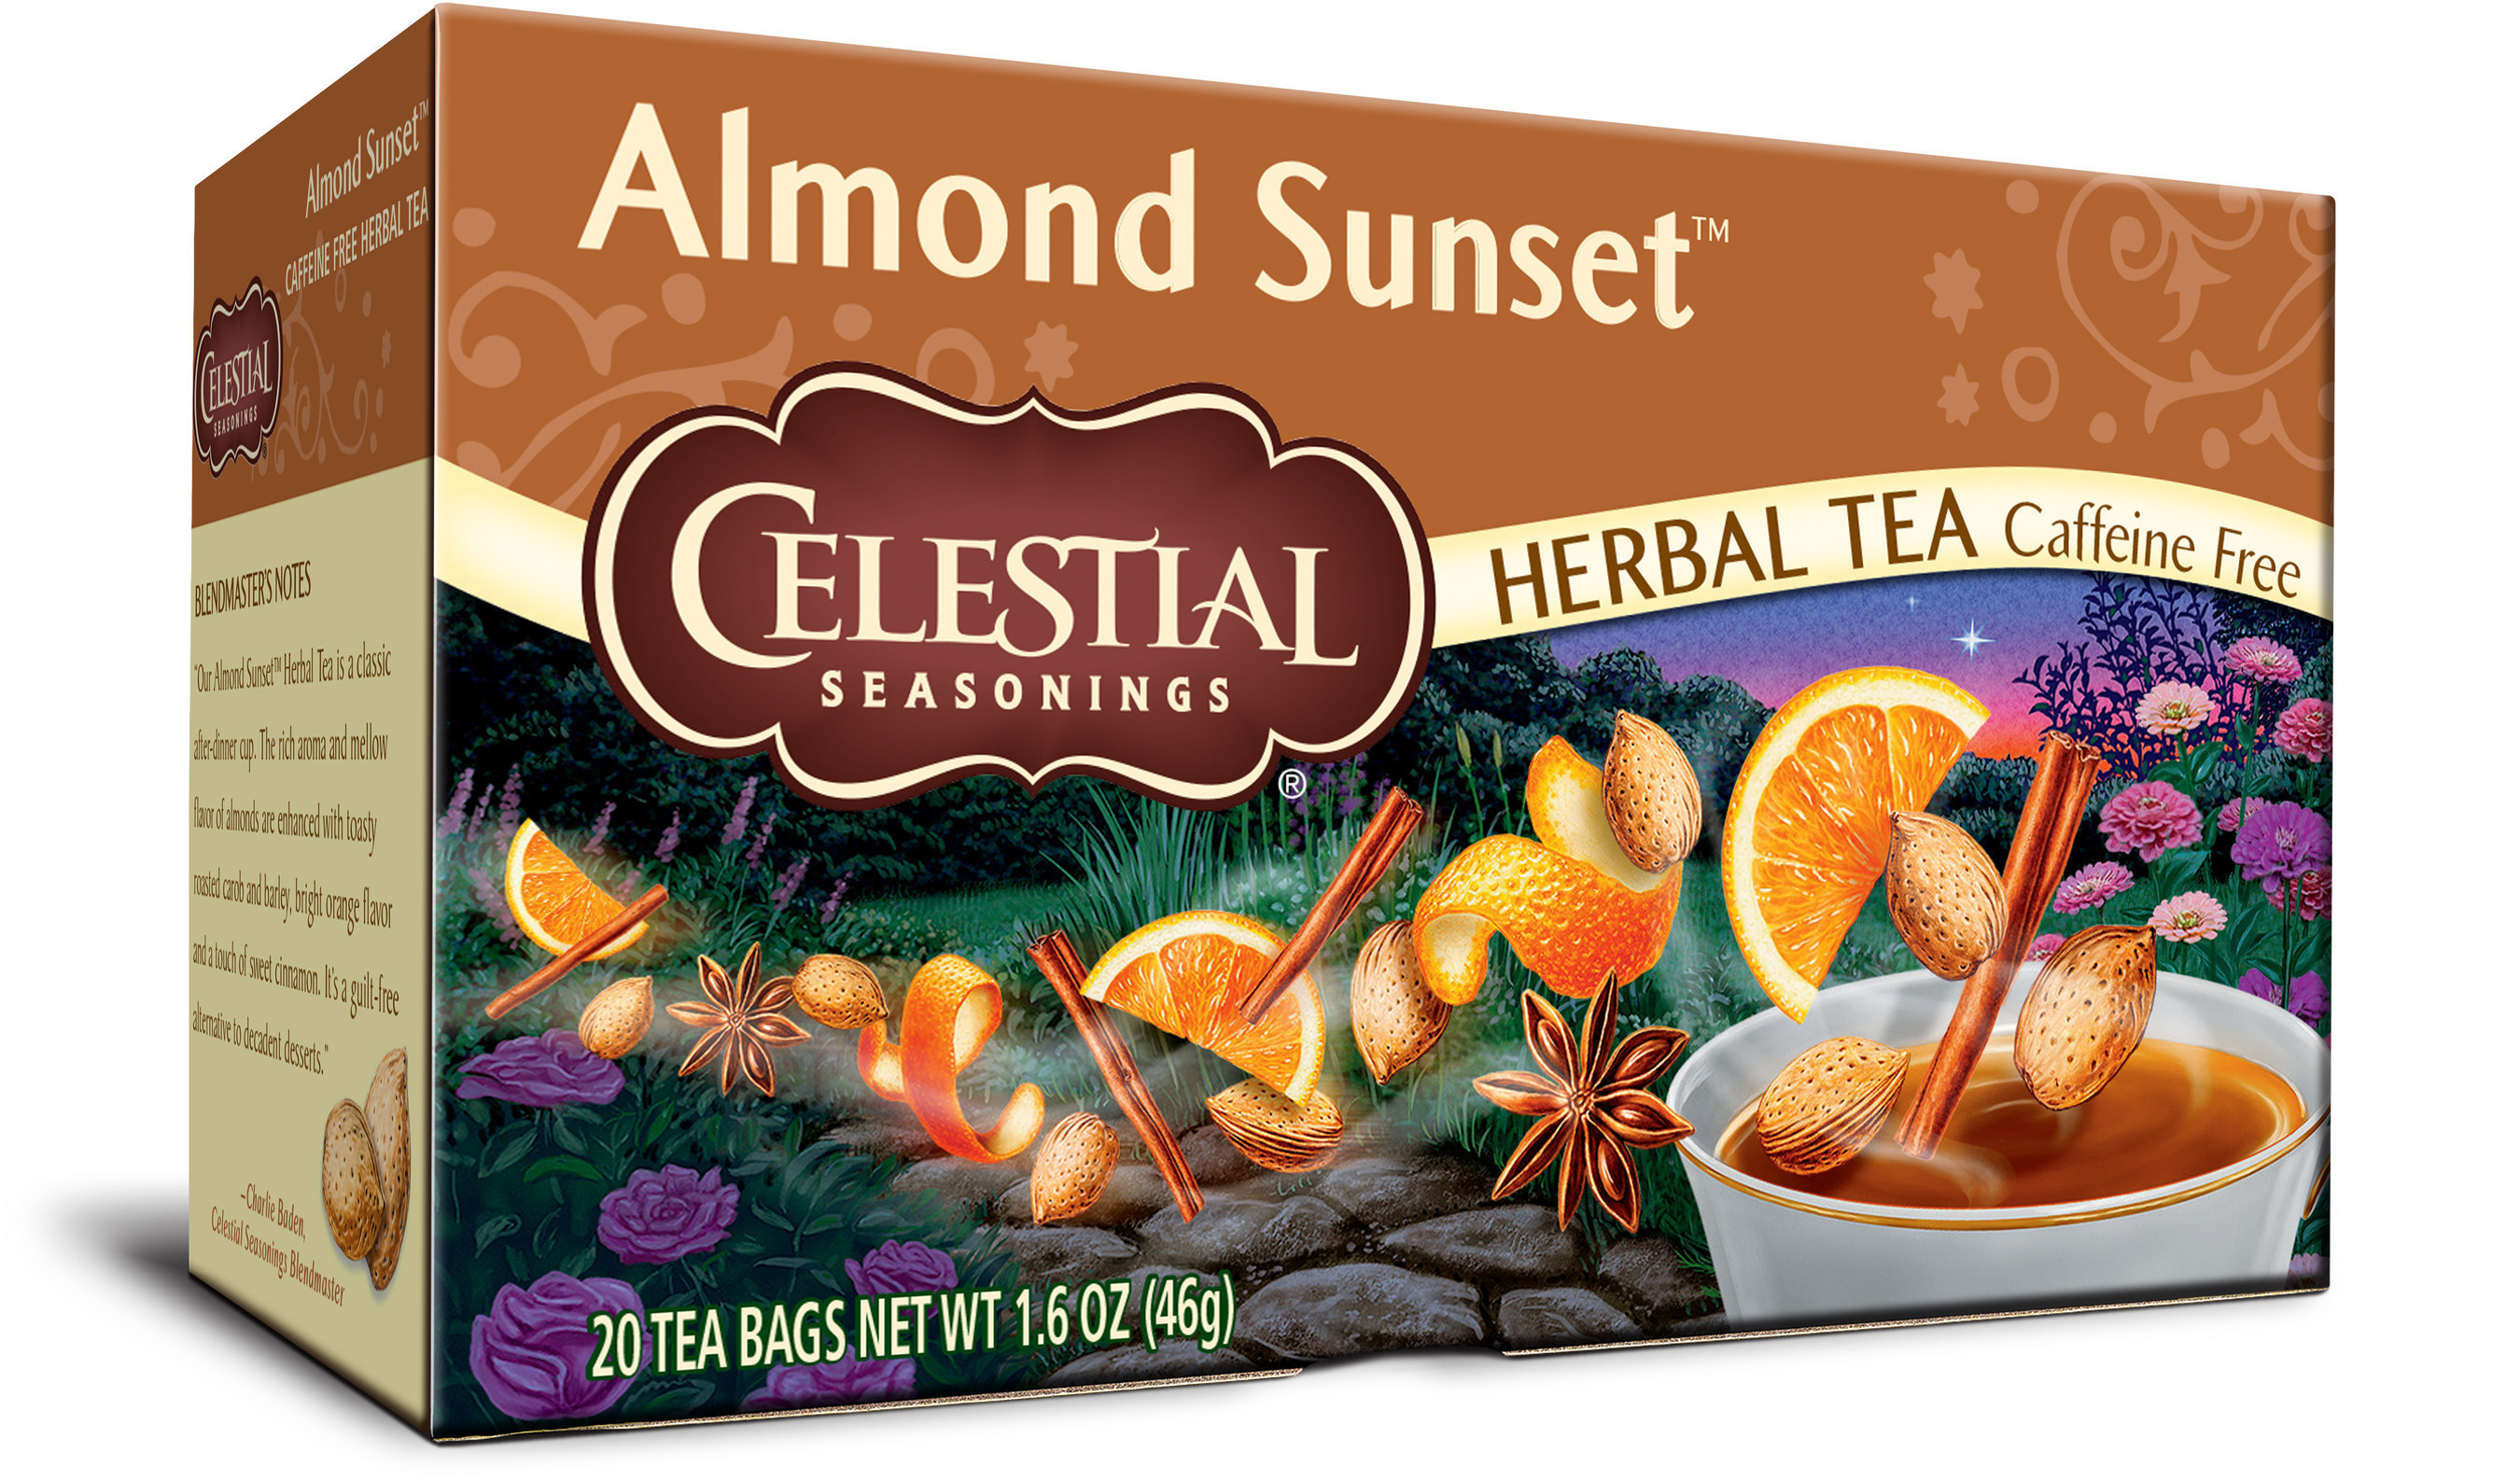 Celestial seasonings almond sunset